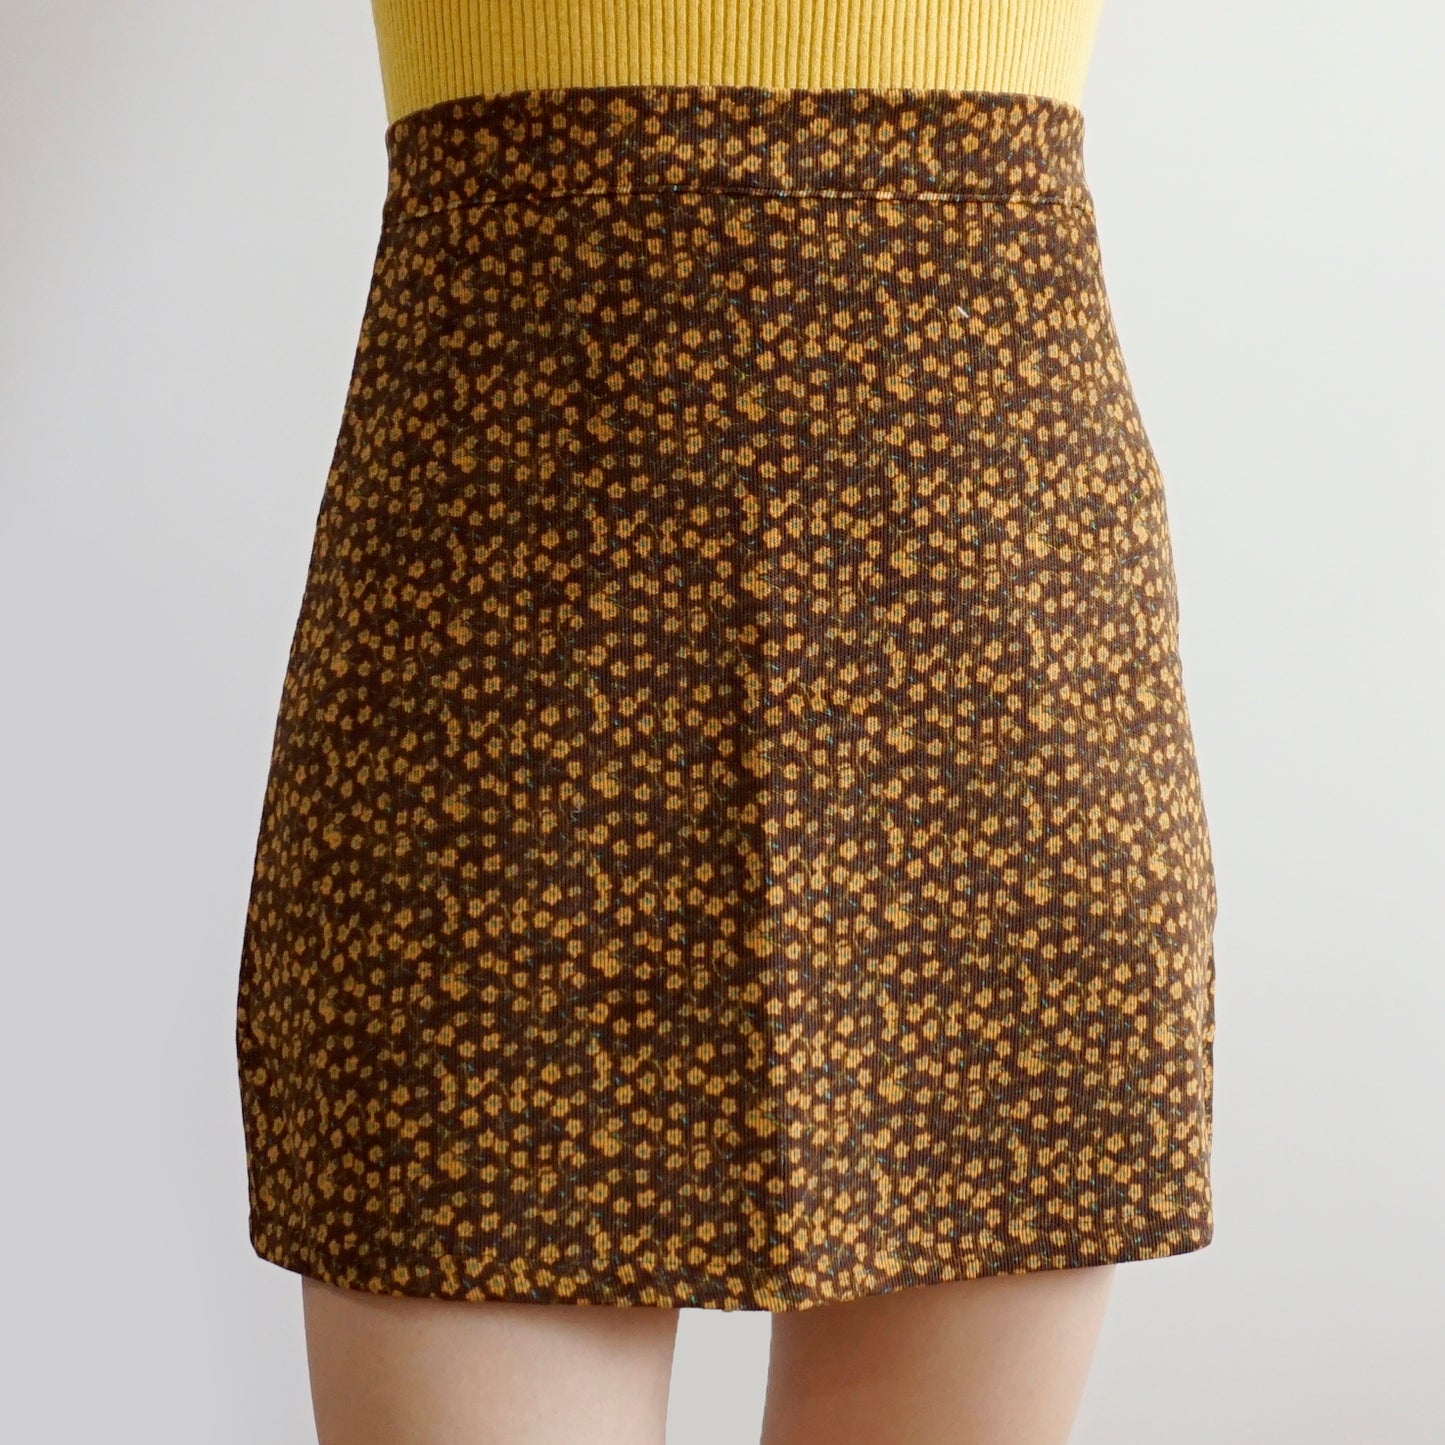 Ditsy Floral Corduroy Mini Skirt (4 Colors)